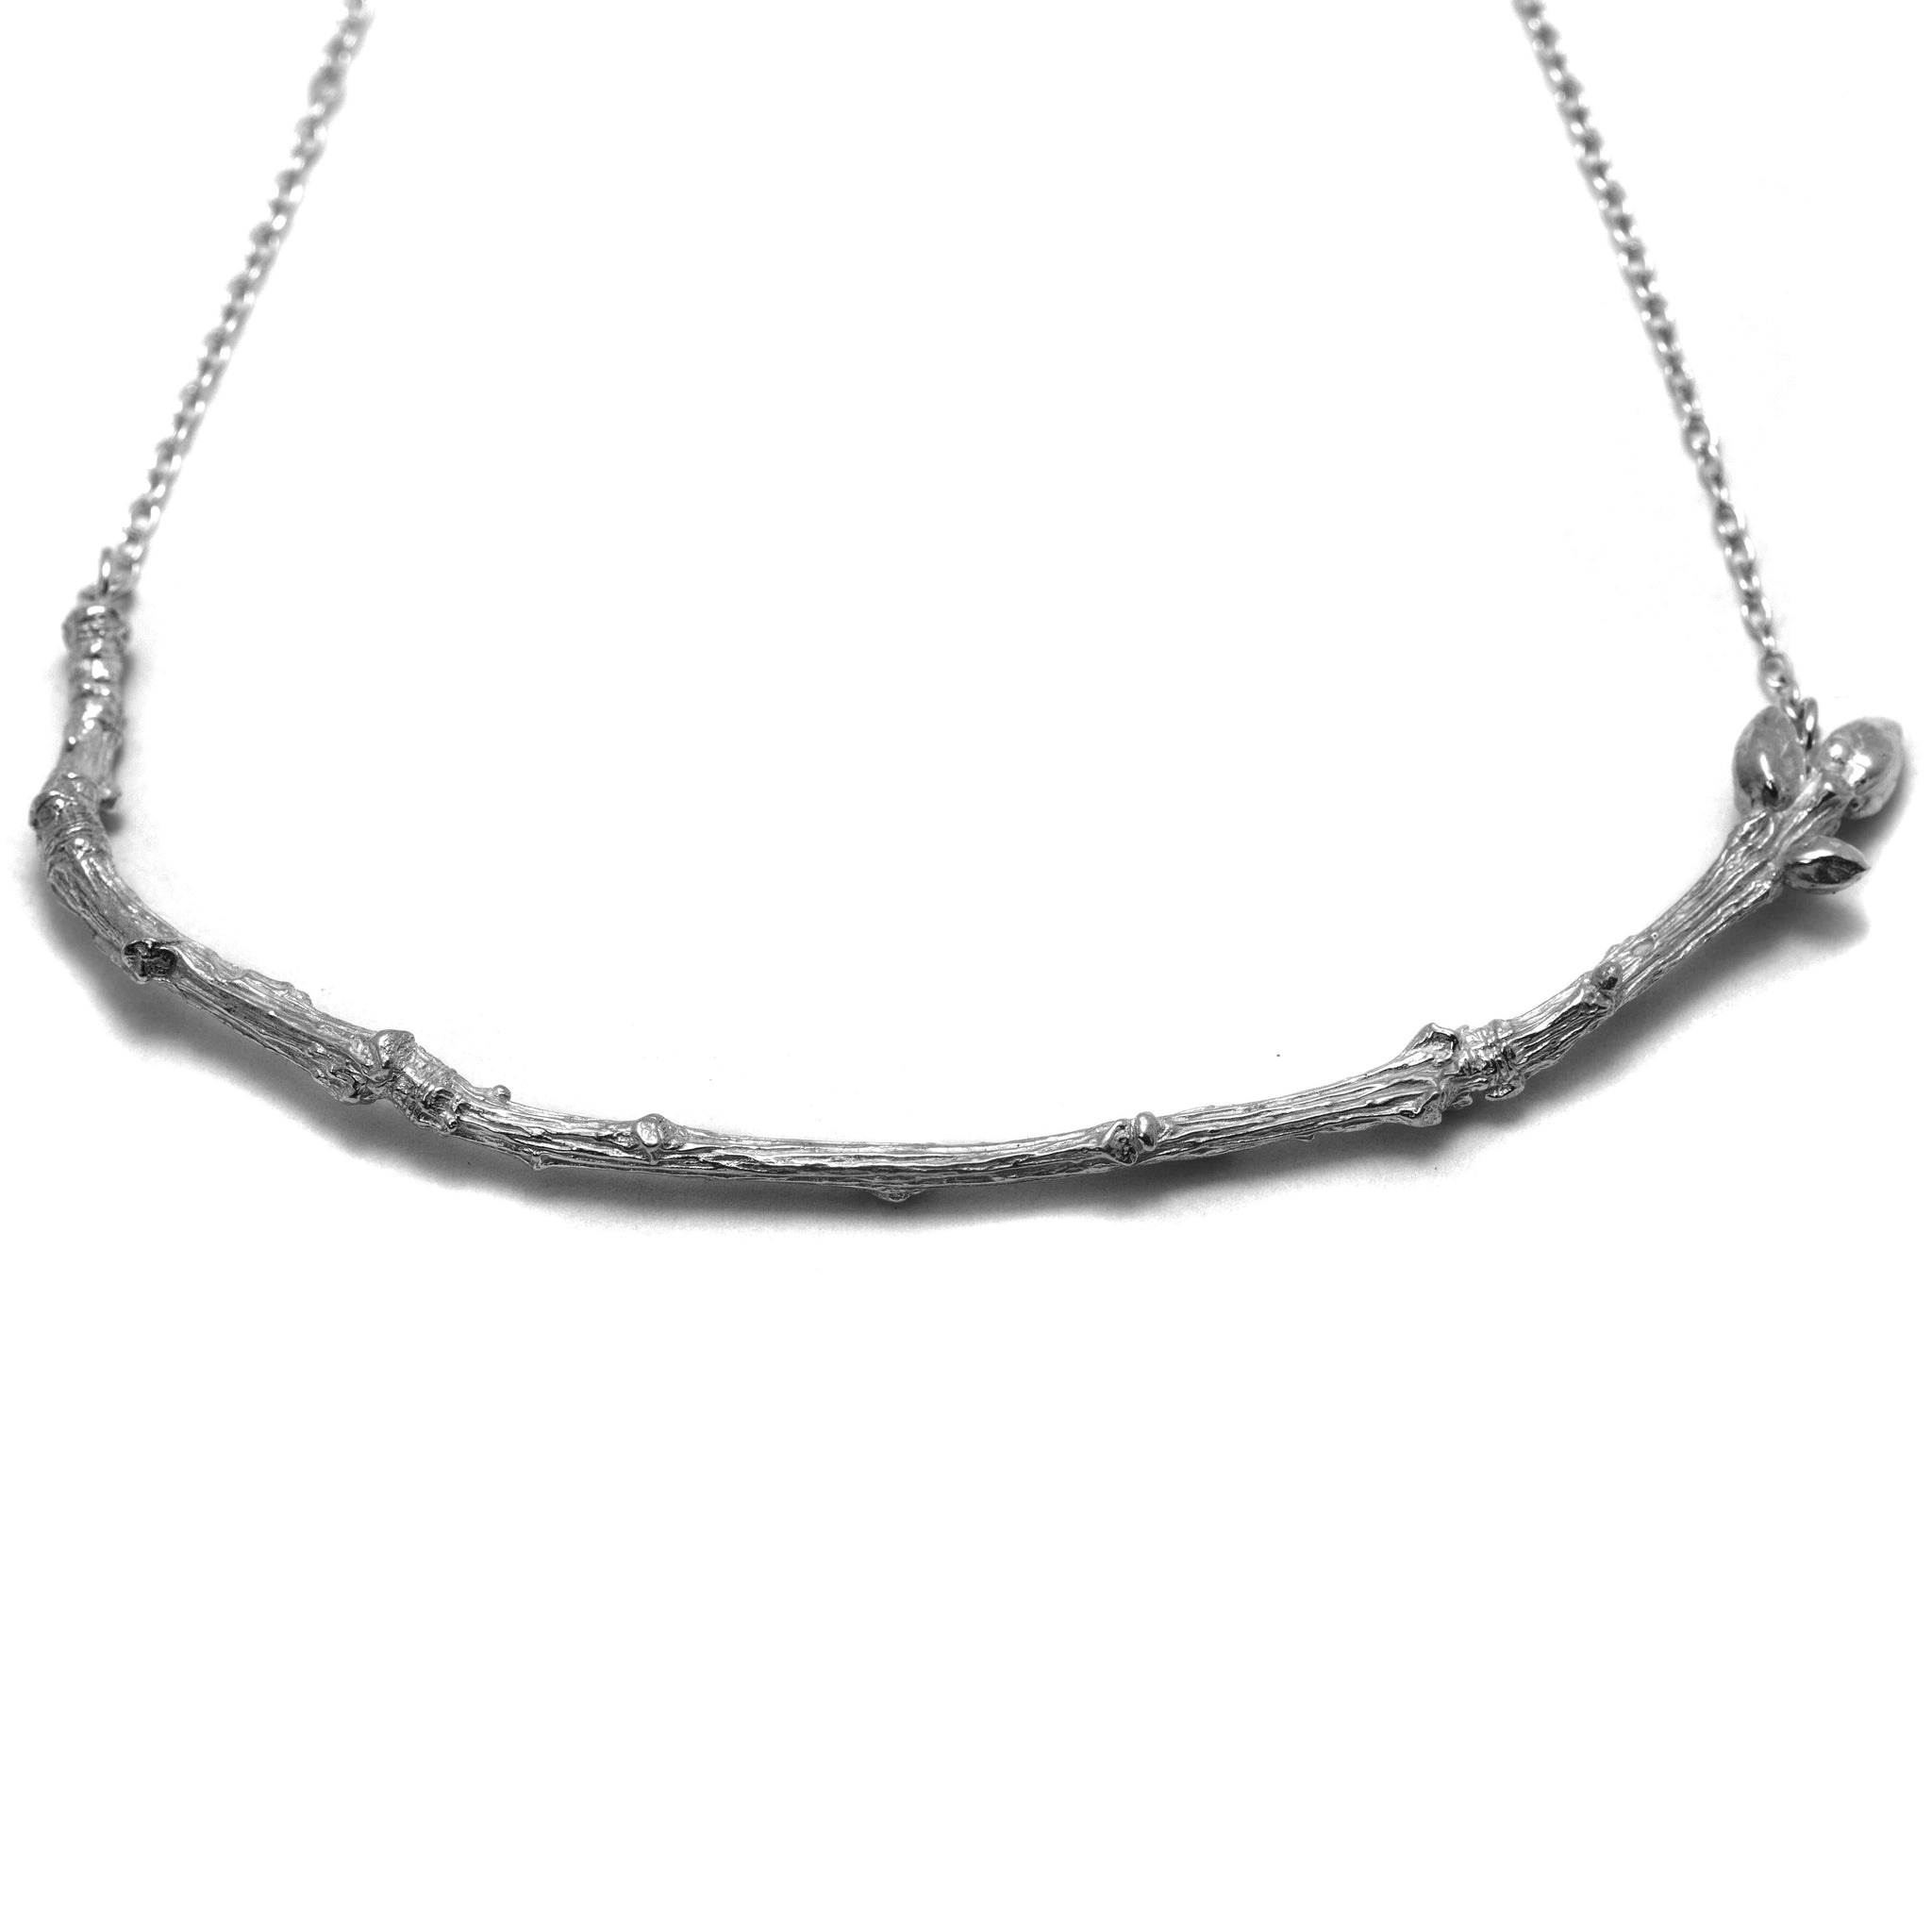 Oxidised Textured Twig Necklace on white background 